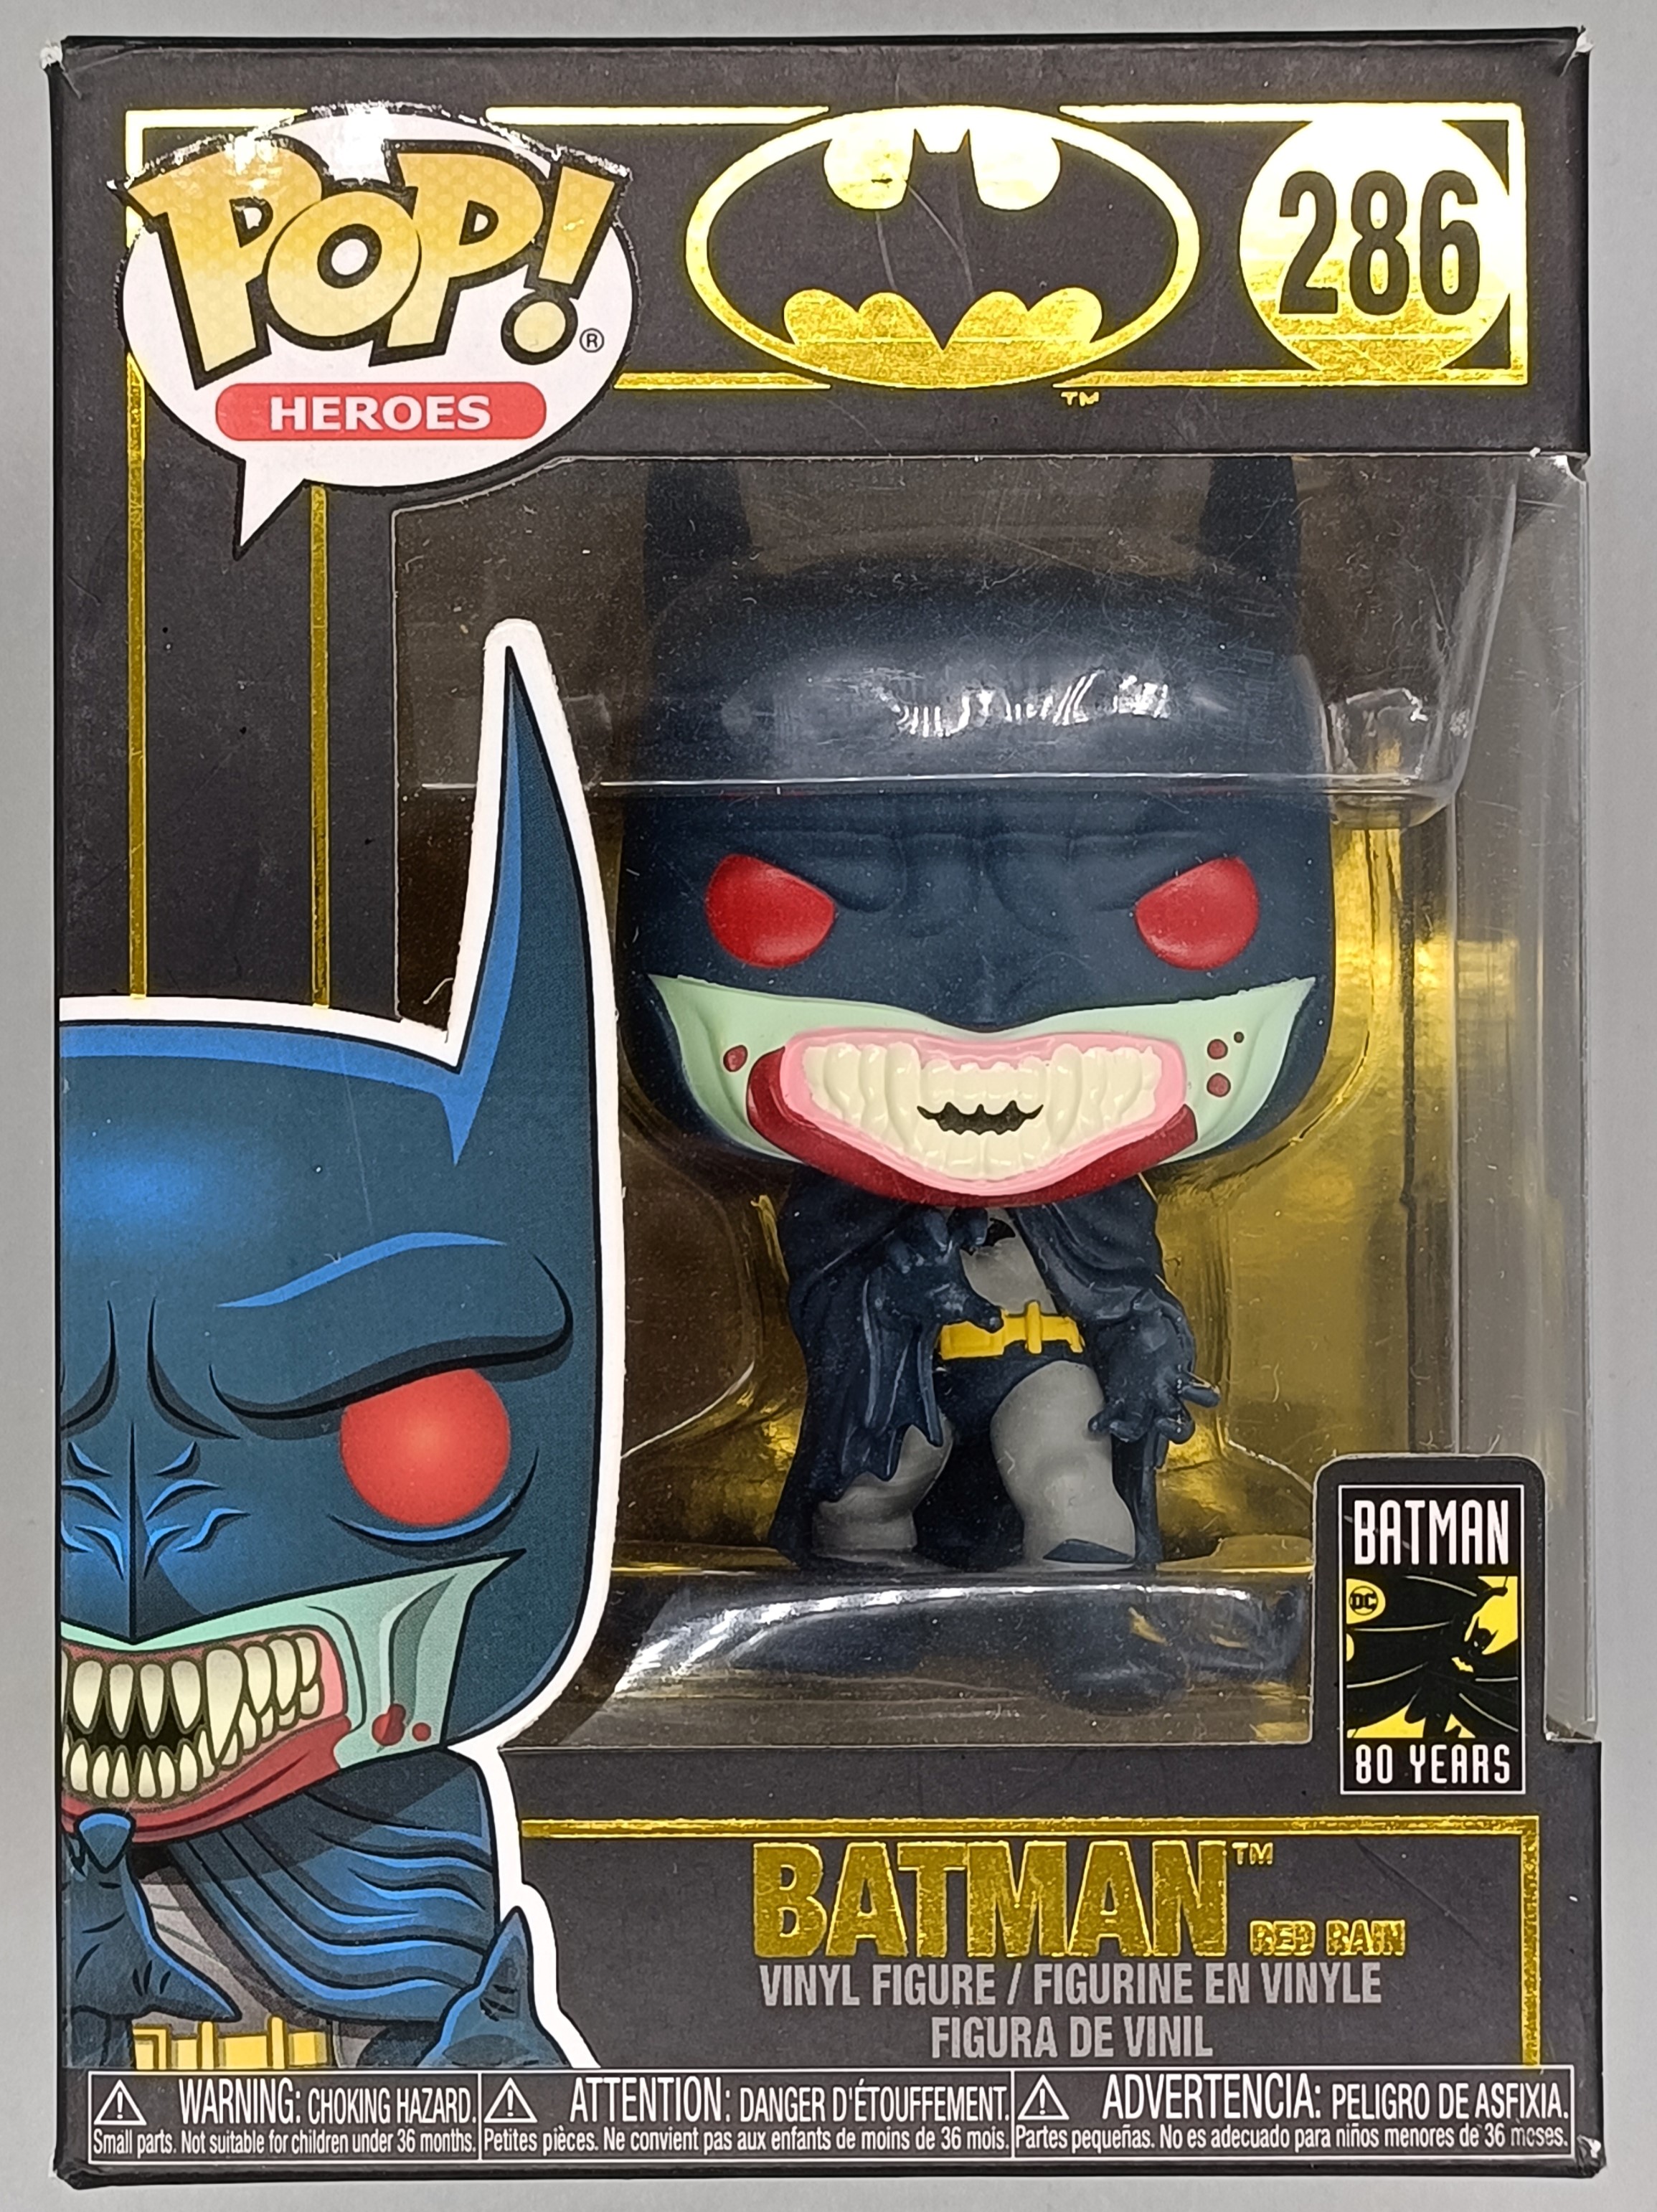 286 Batman (Red Rain) - DC - Batman 80 Years - BOX DAMAGE – Funko Pops